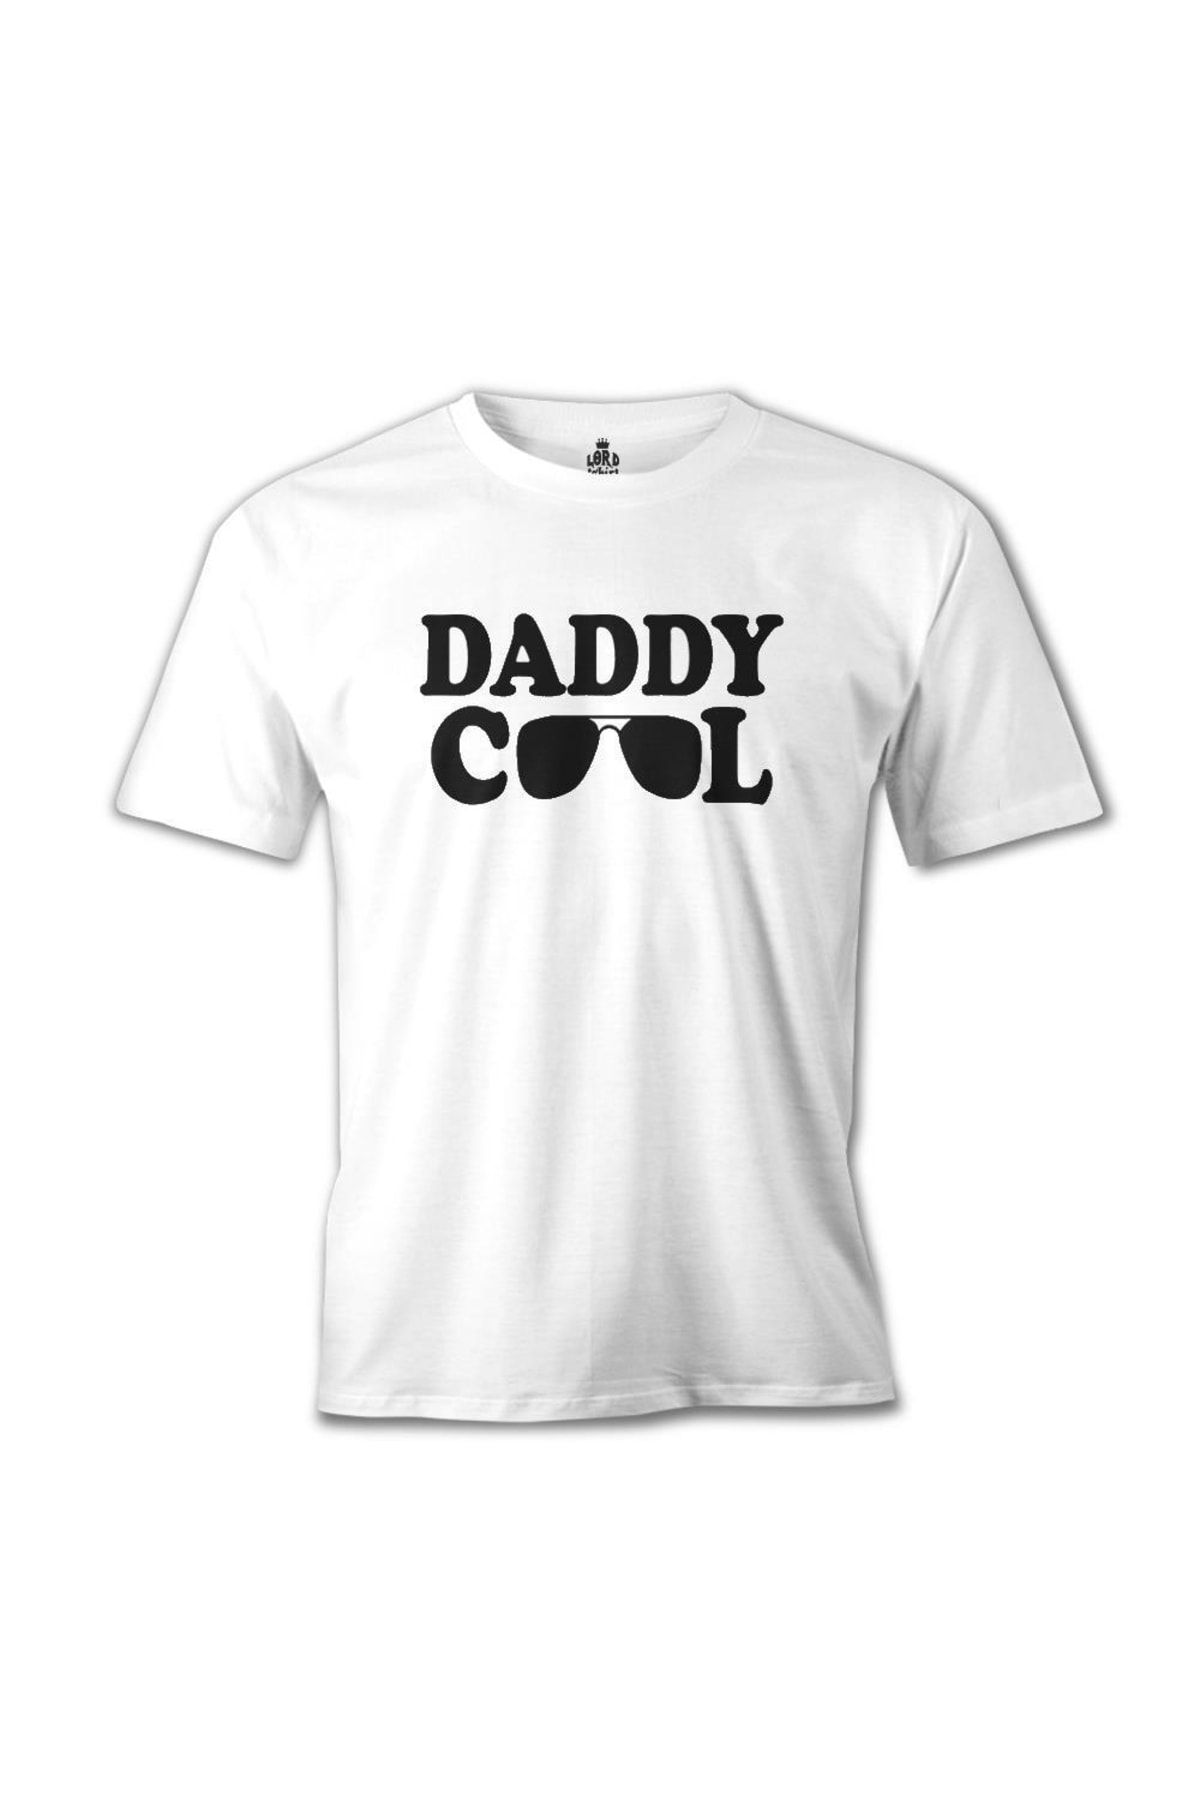 Lord T-Shirt Daddy Cool Beyaz Erkek Tshirt - MB-711